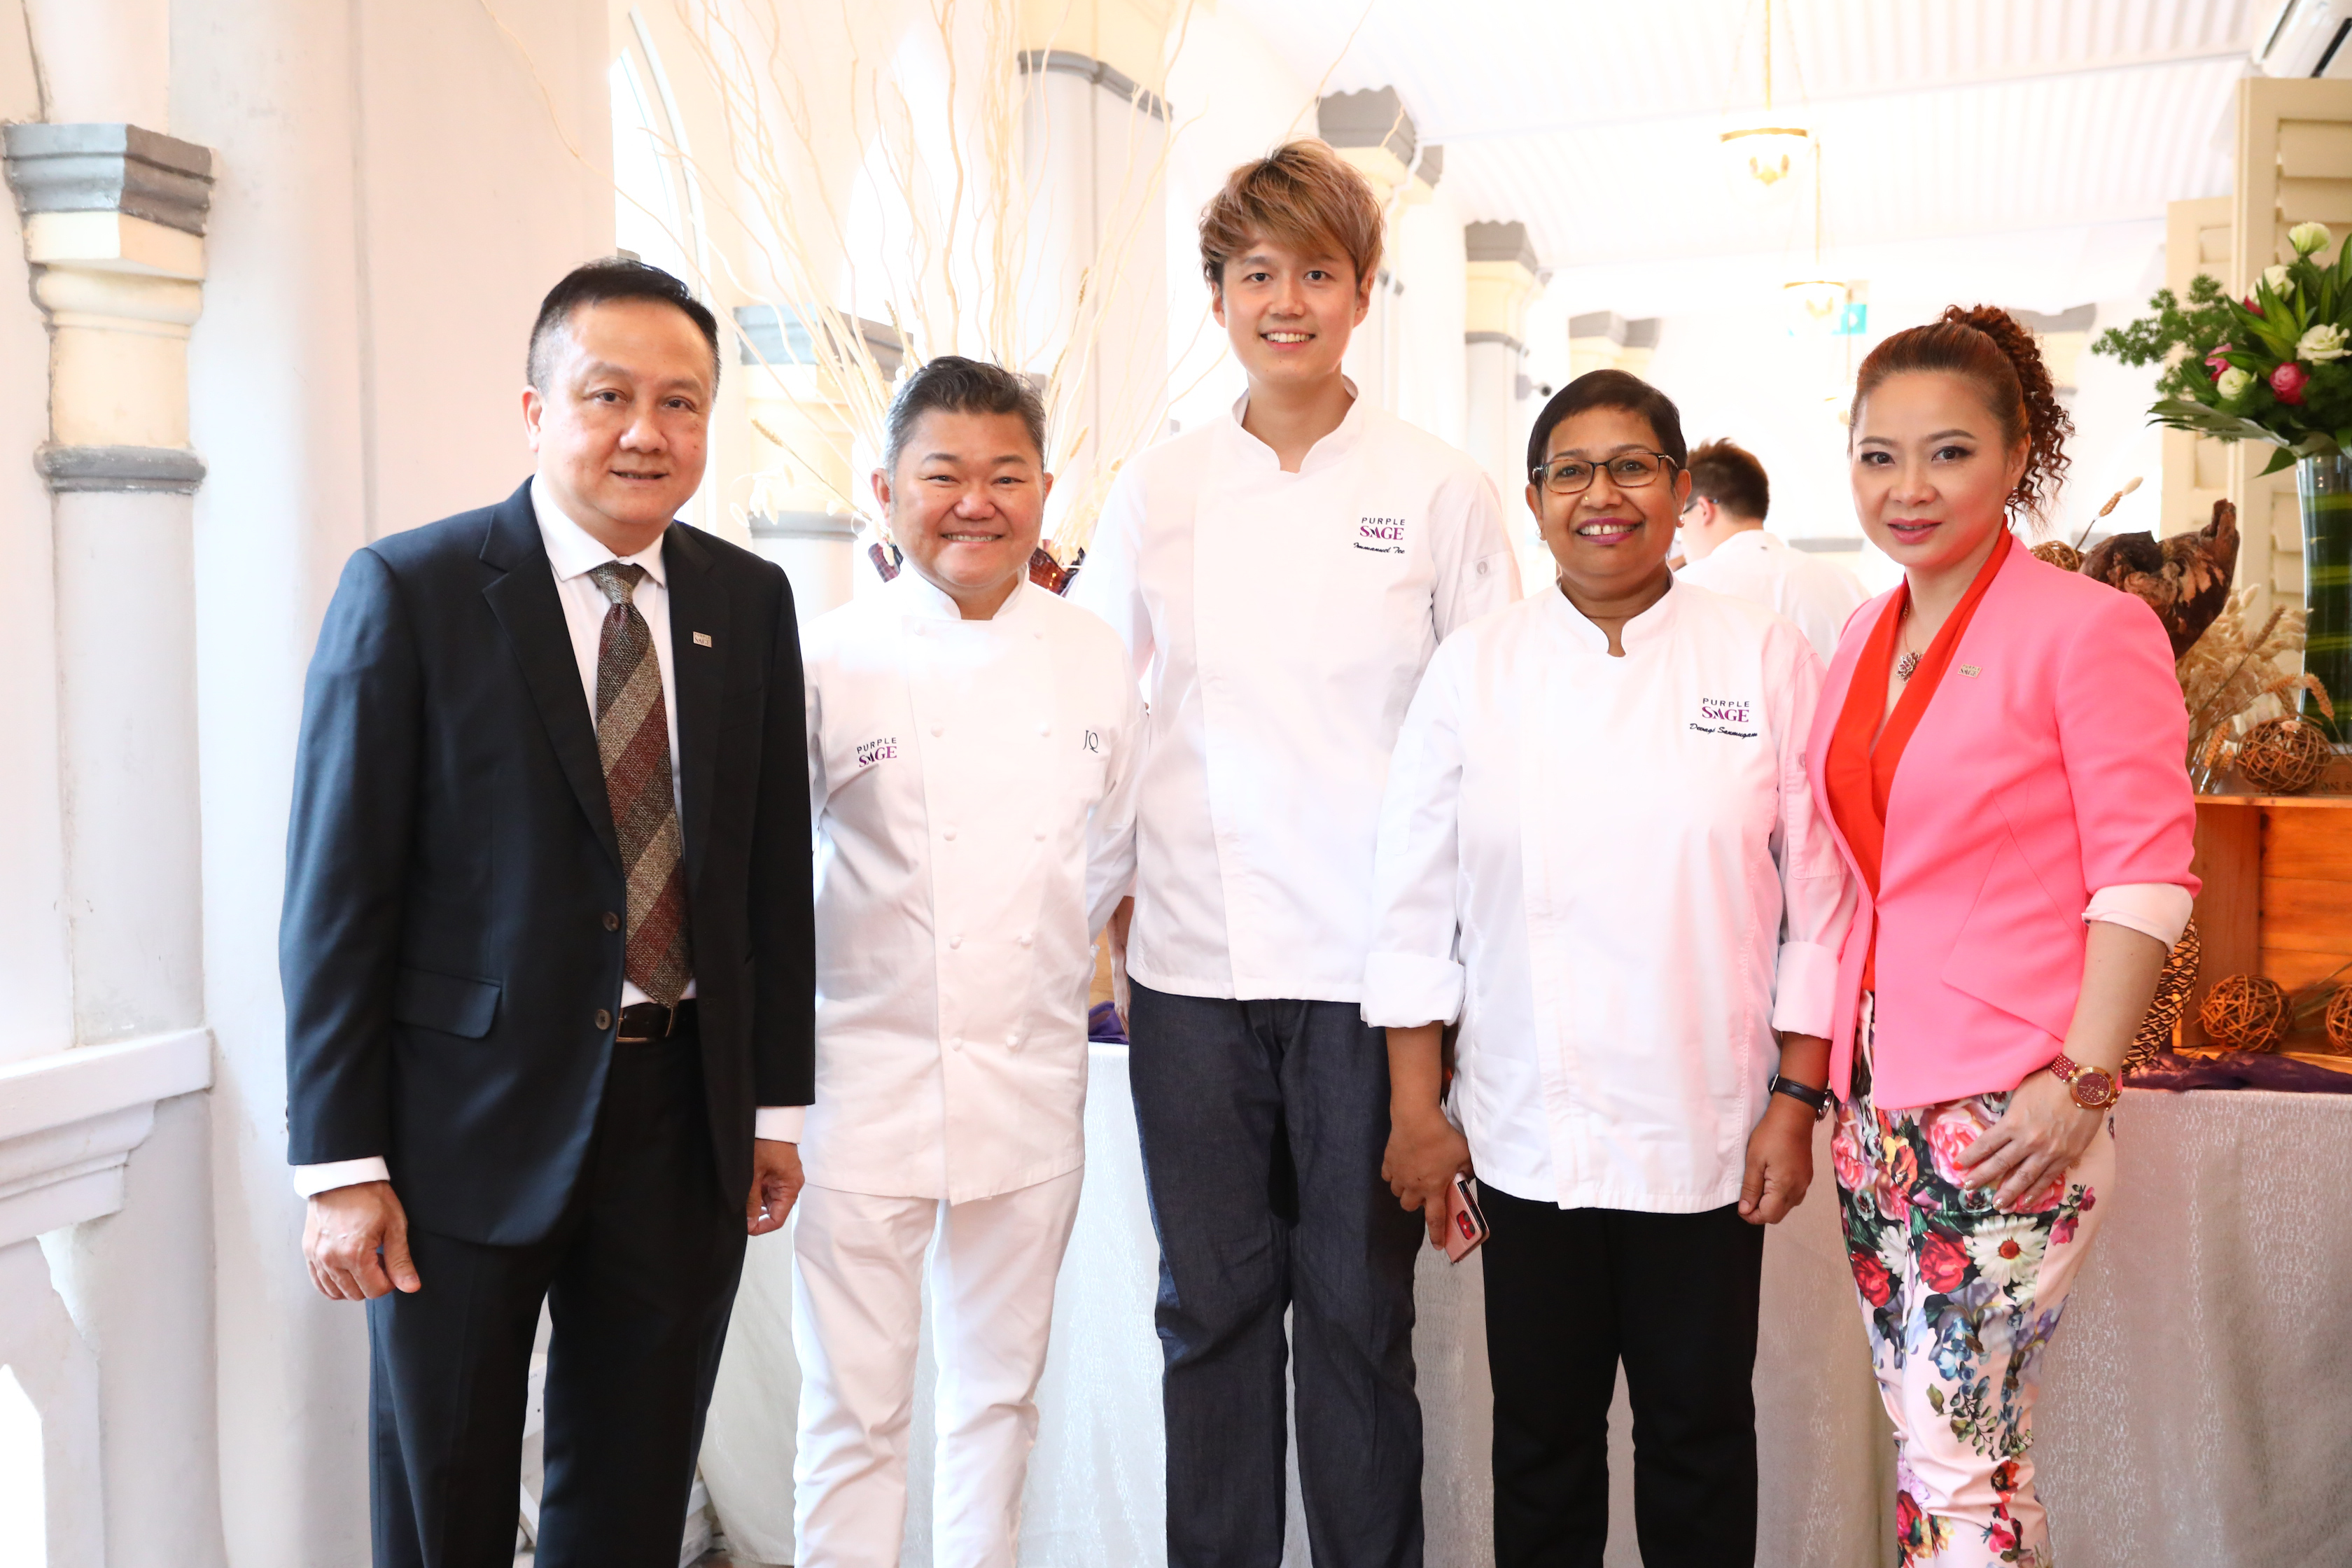 Alan Tan, Chef Justin, Chef Immanuel, Chef Devagi, Chris Loh